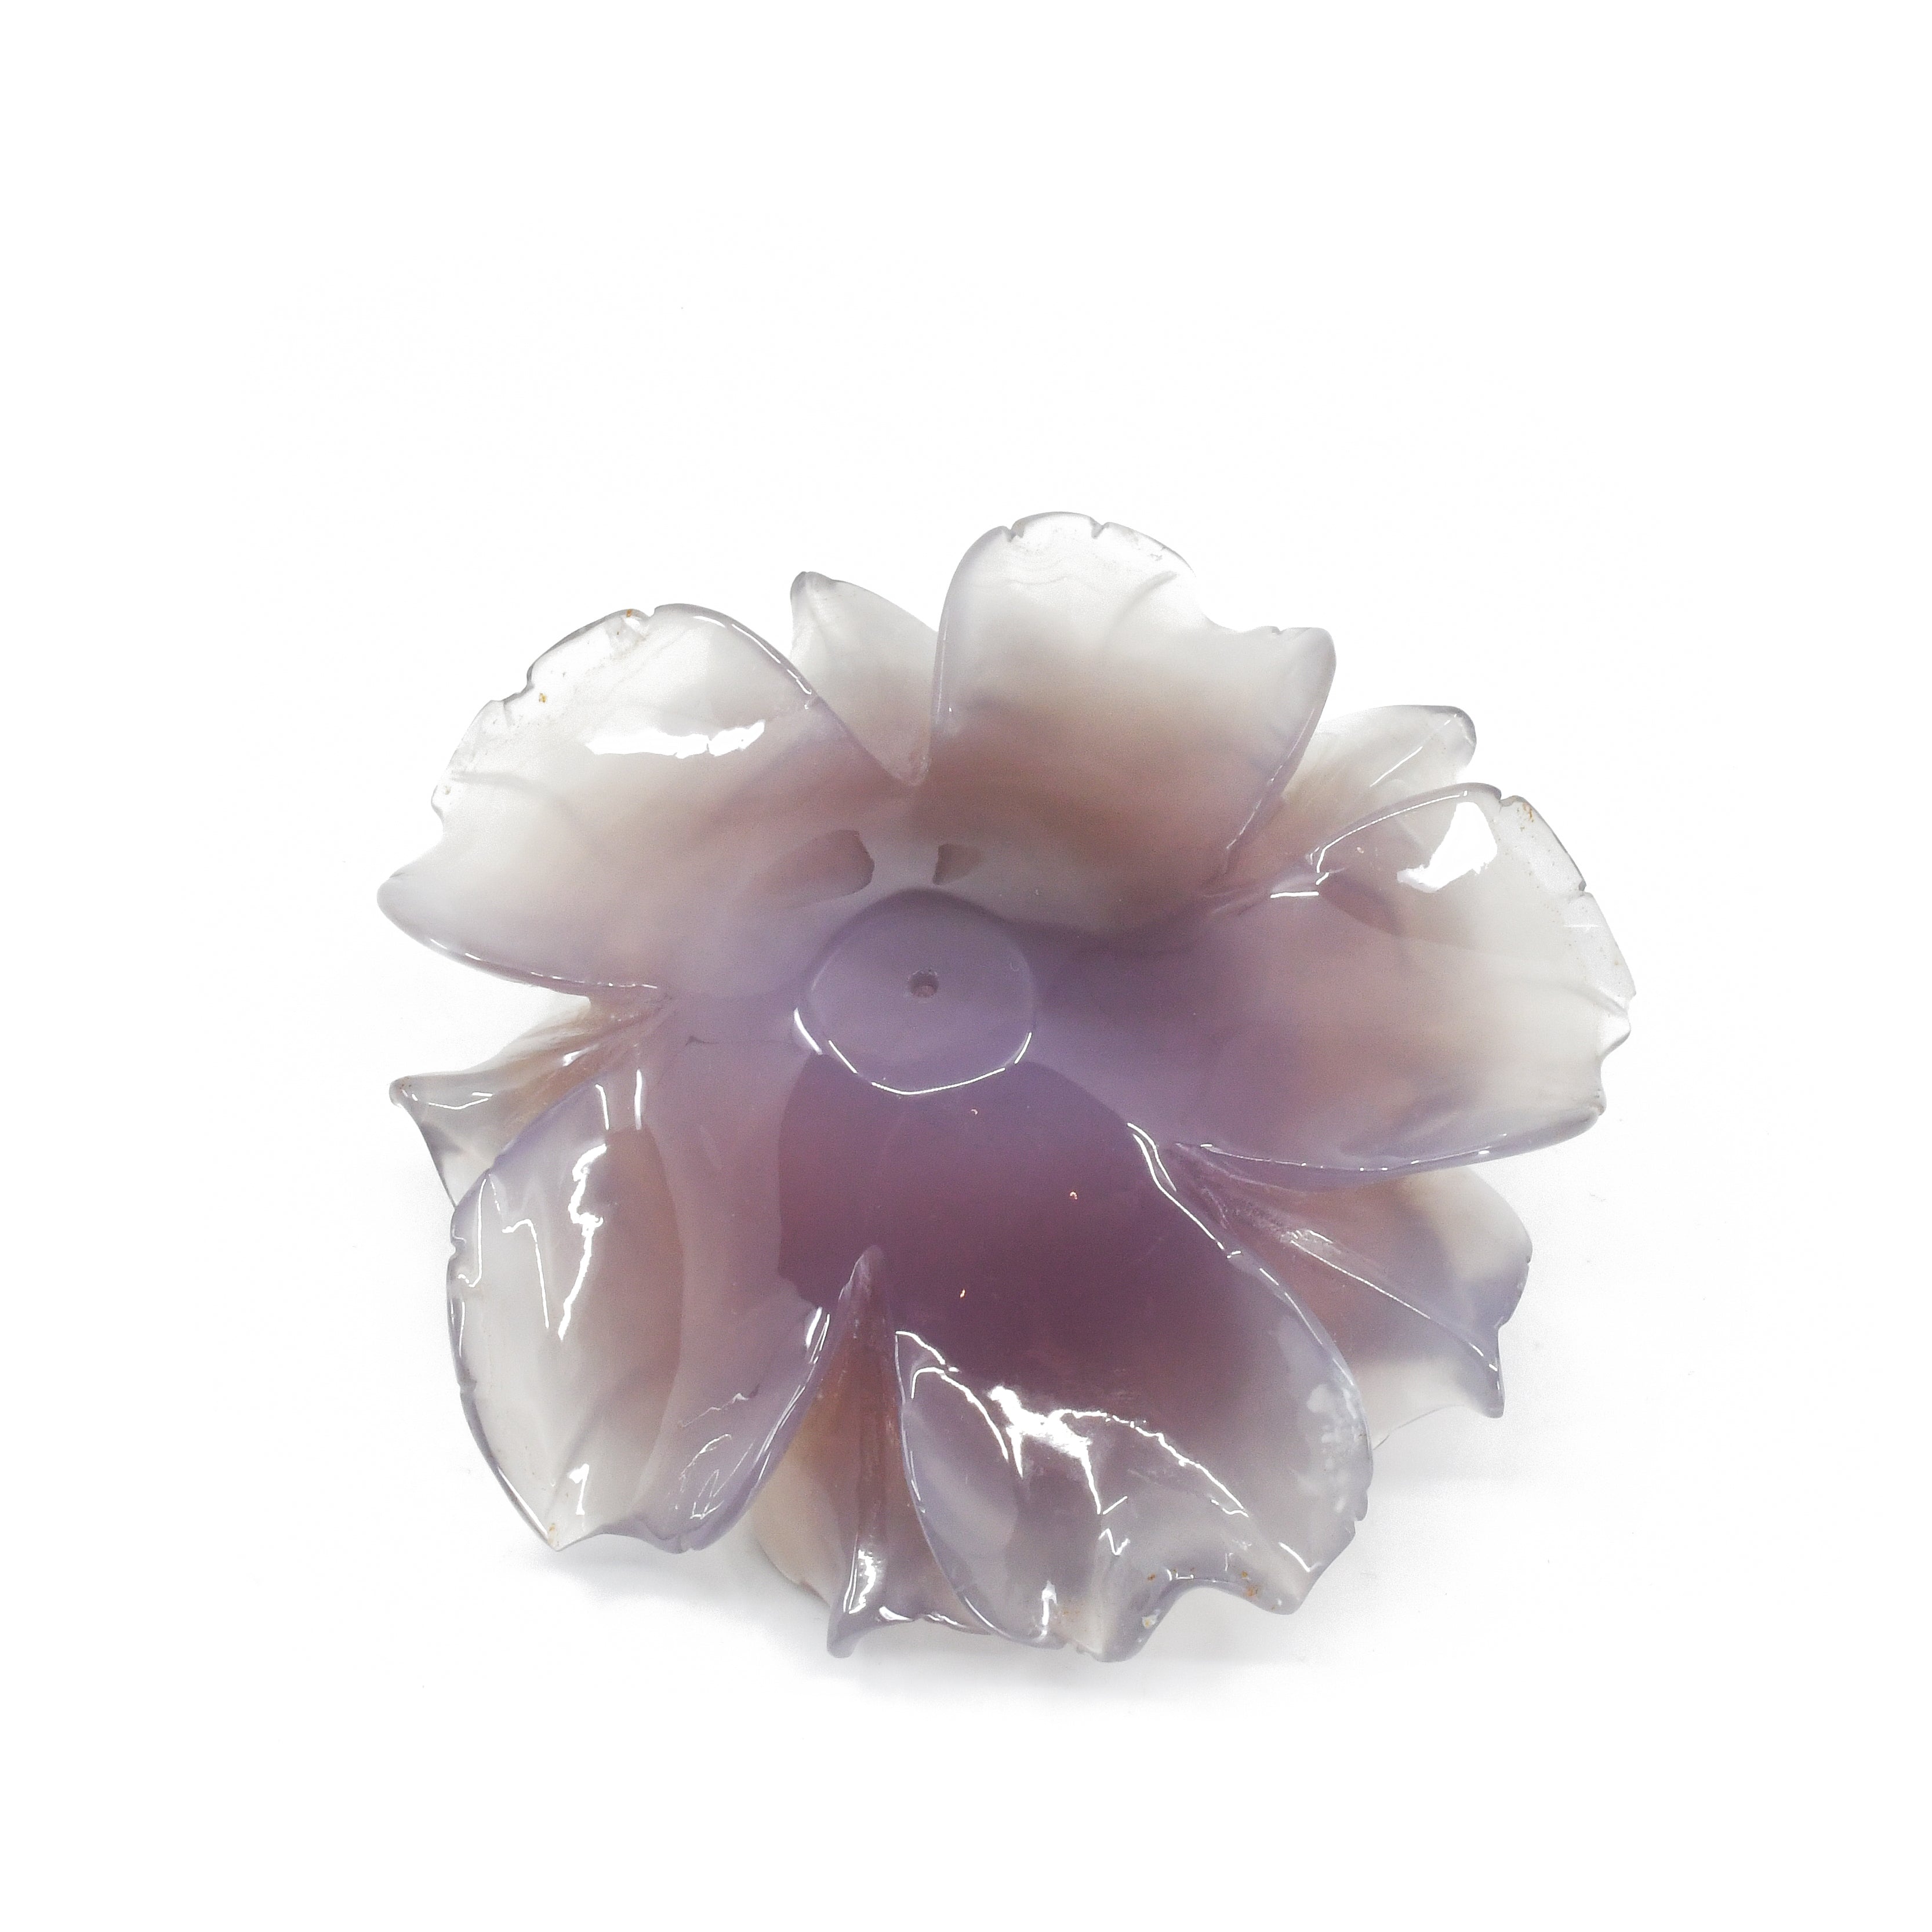 Agate - Lavender Agate Carved Crystal Flower - China - YF-006 - Crystalarium